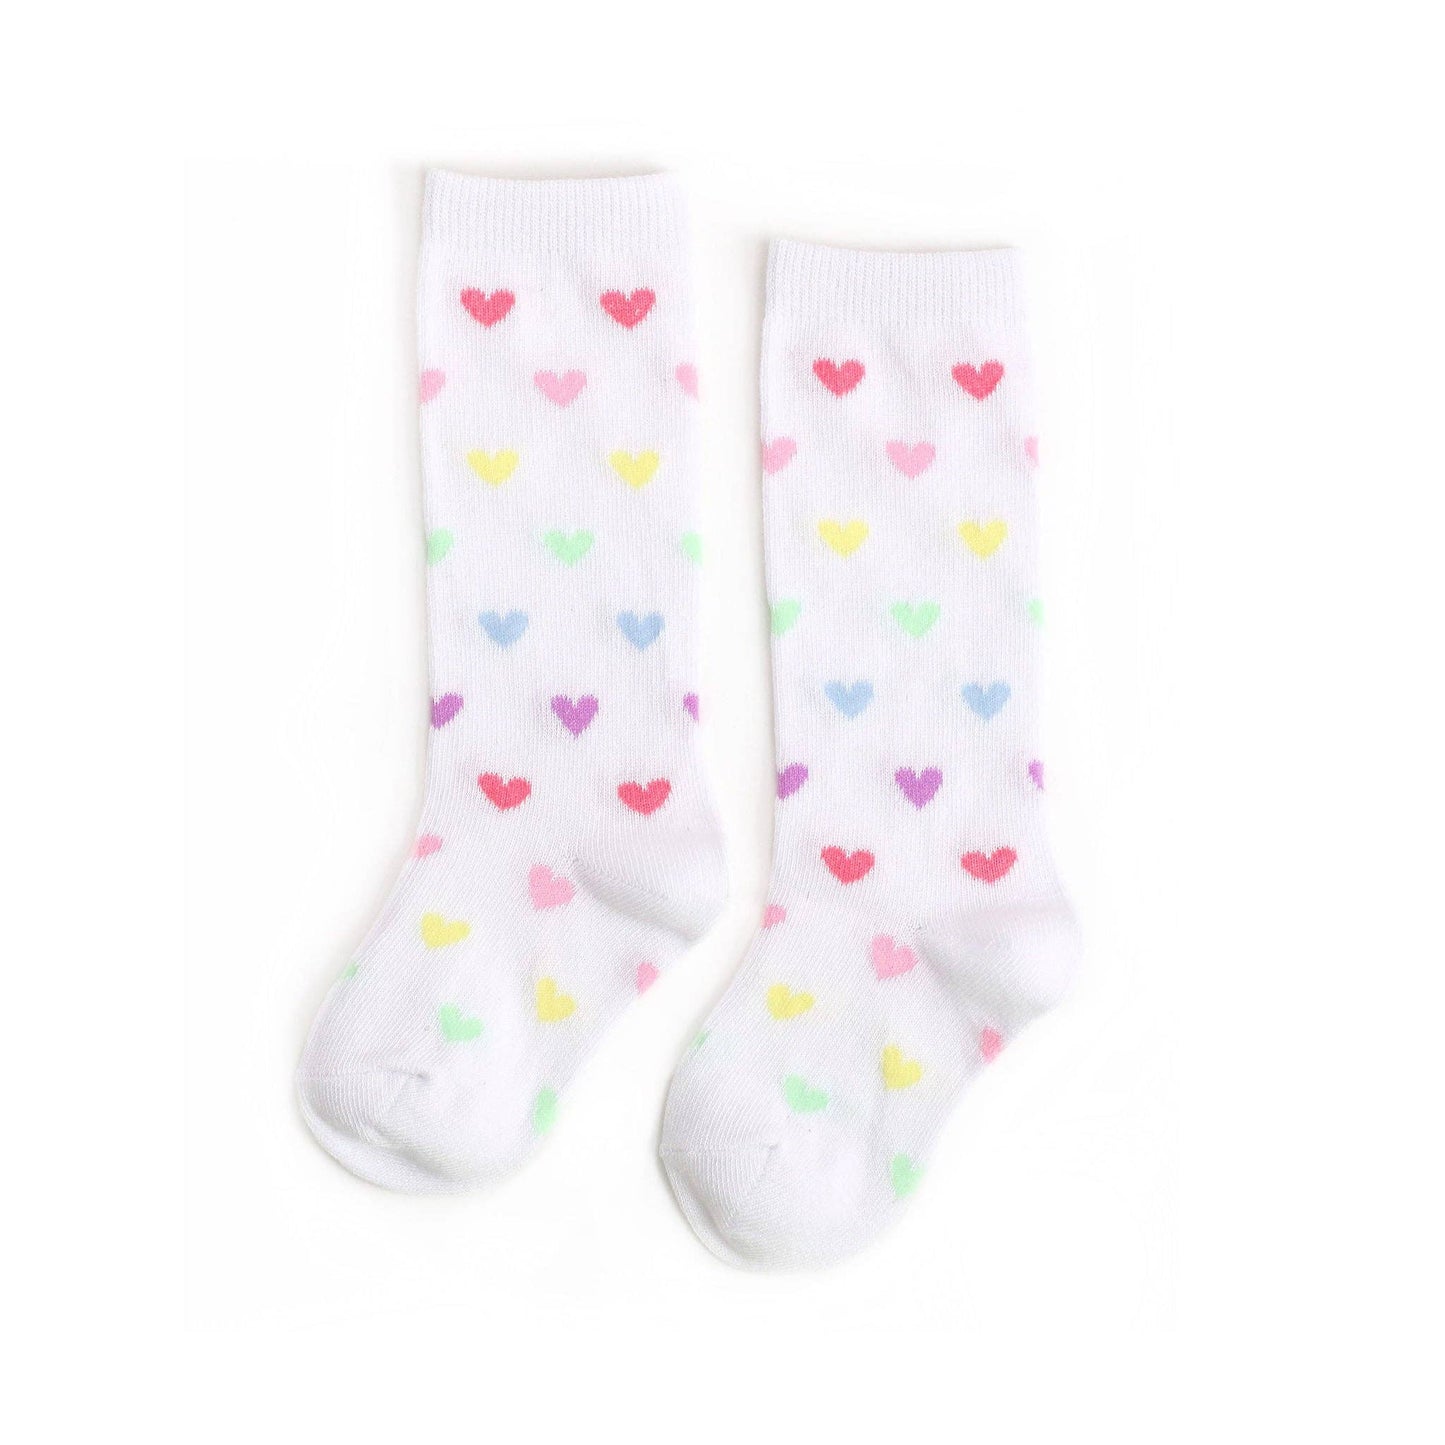 Sweetheart Knee High Socks